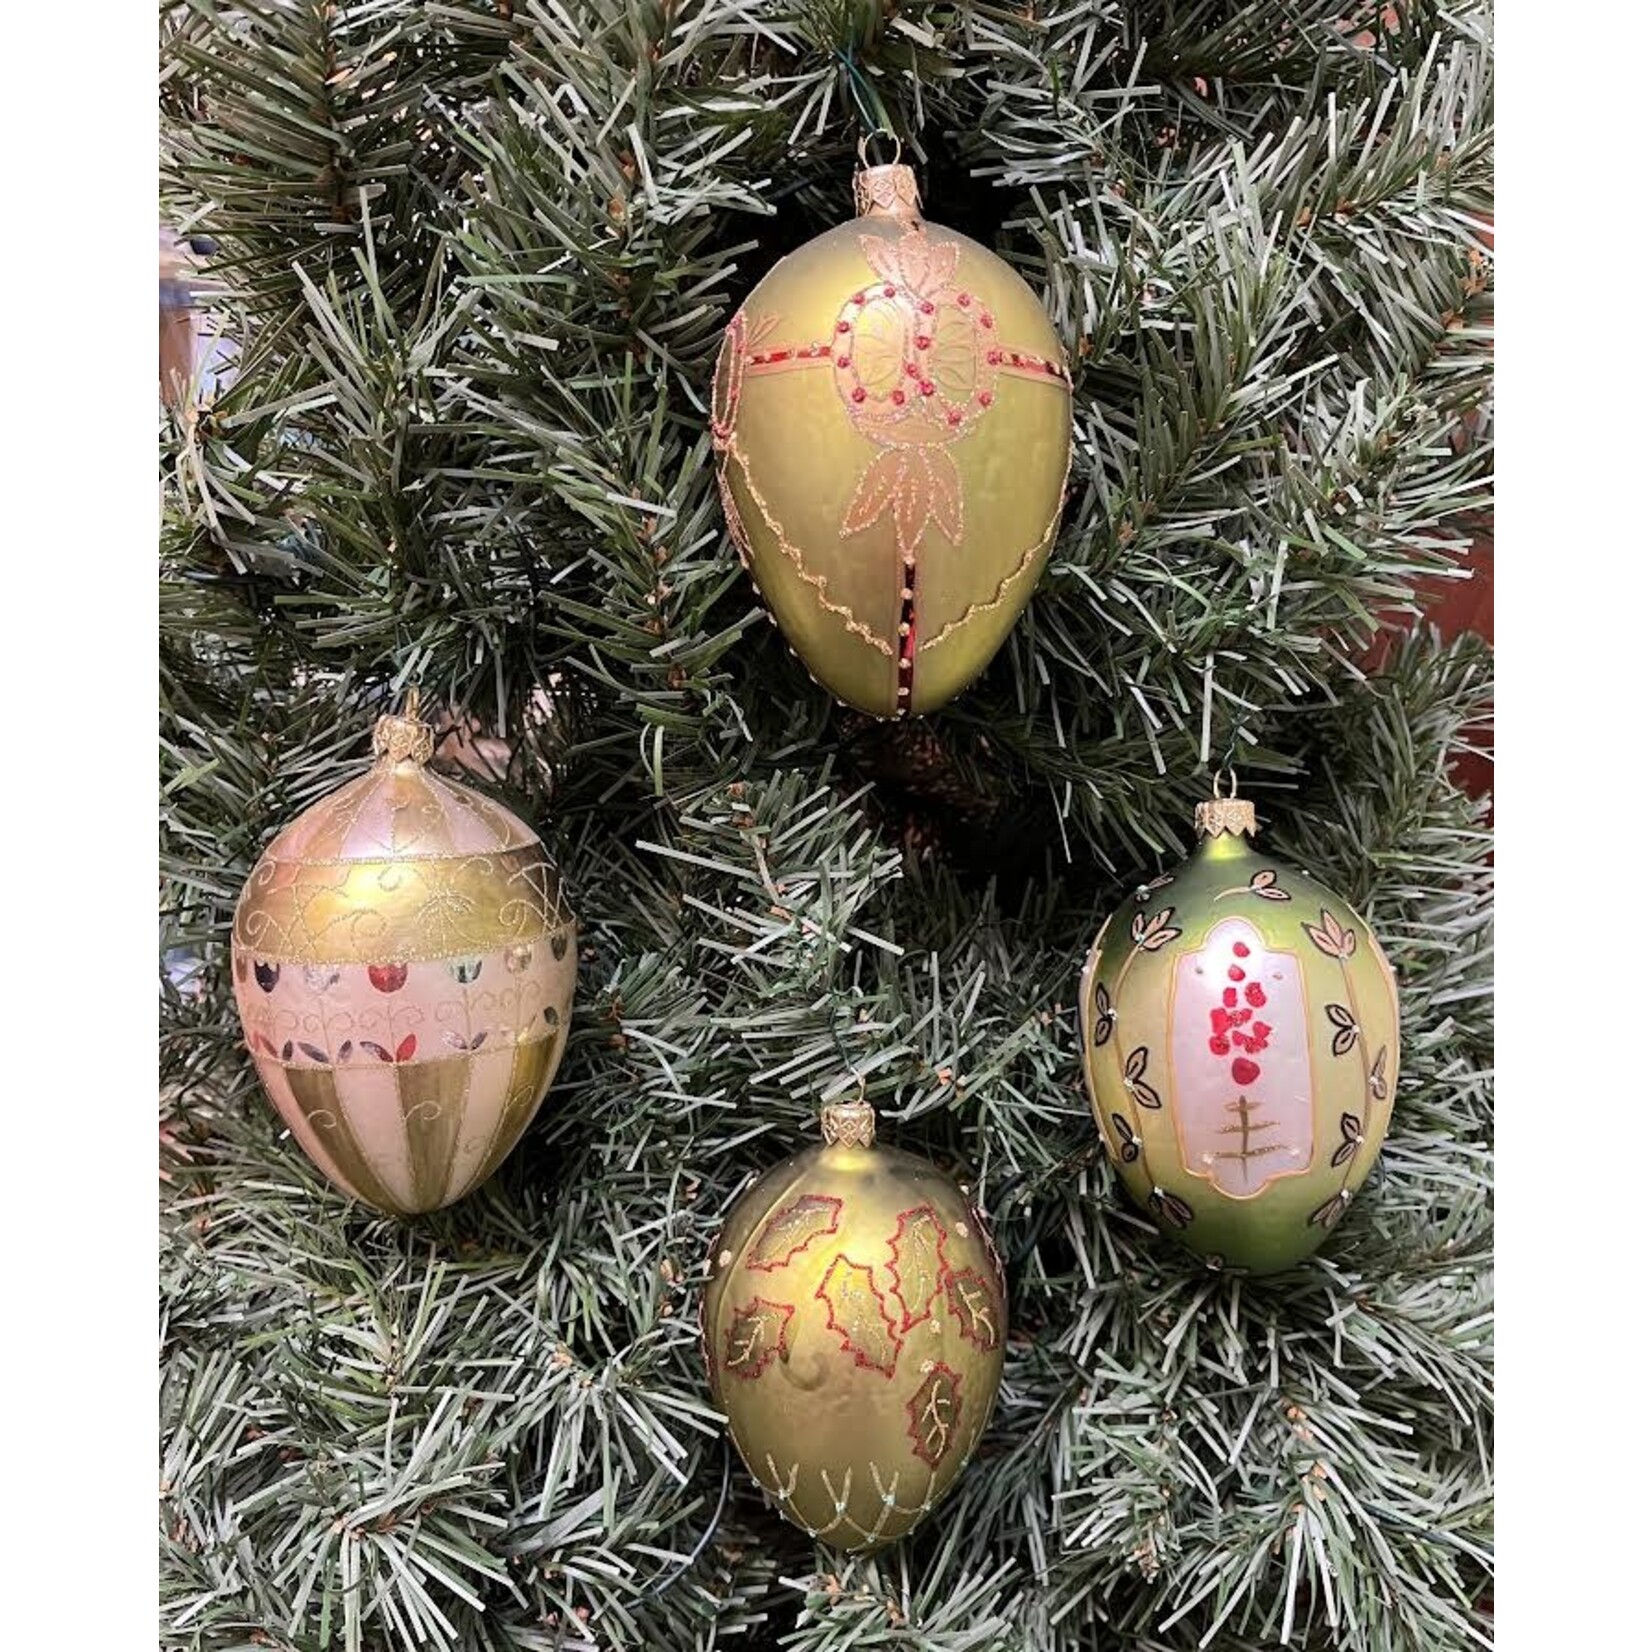 Tannenbaum Treasures Eggs Assortment  Green Ornament